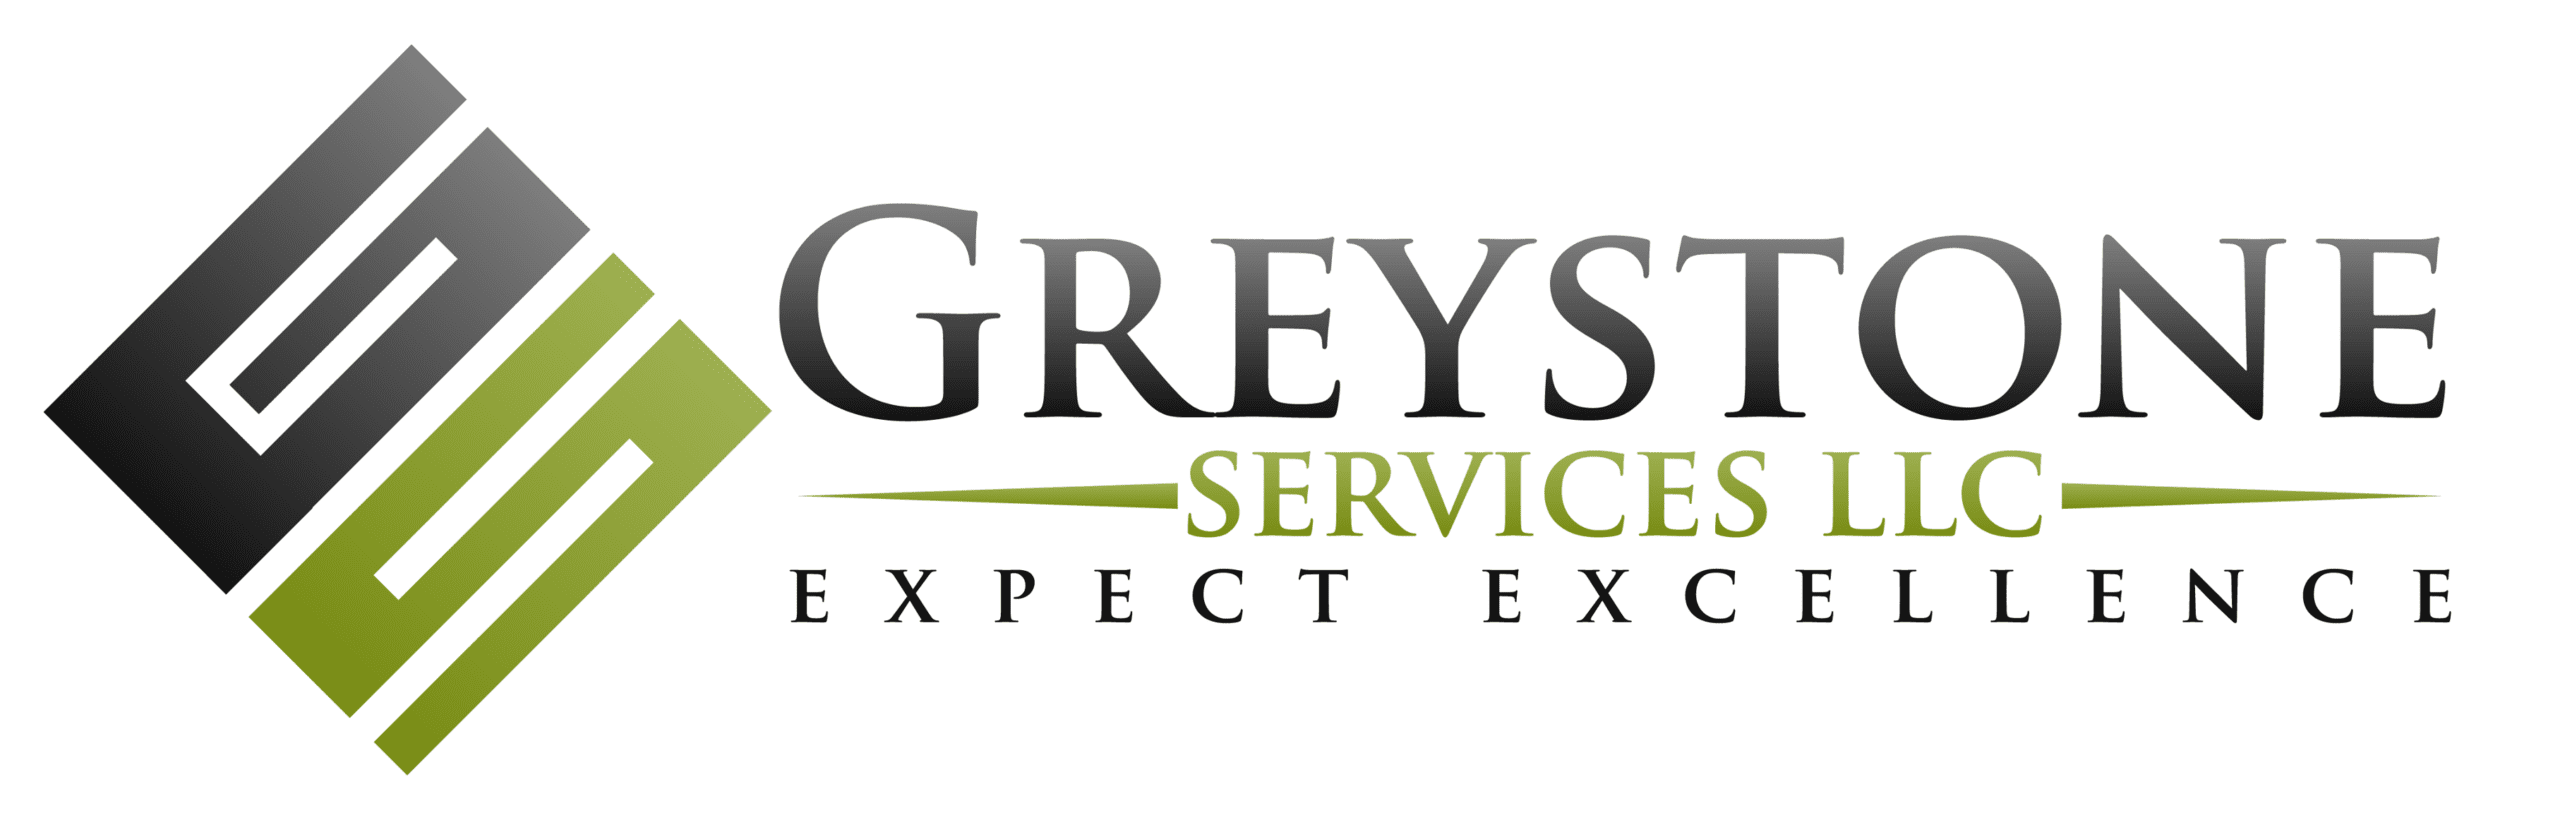 Greystone Services